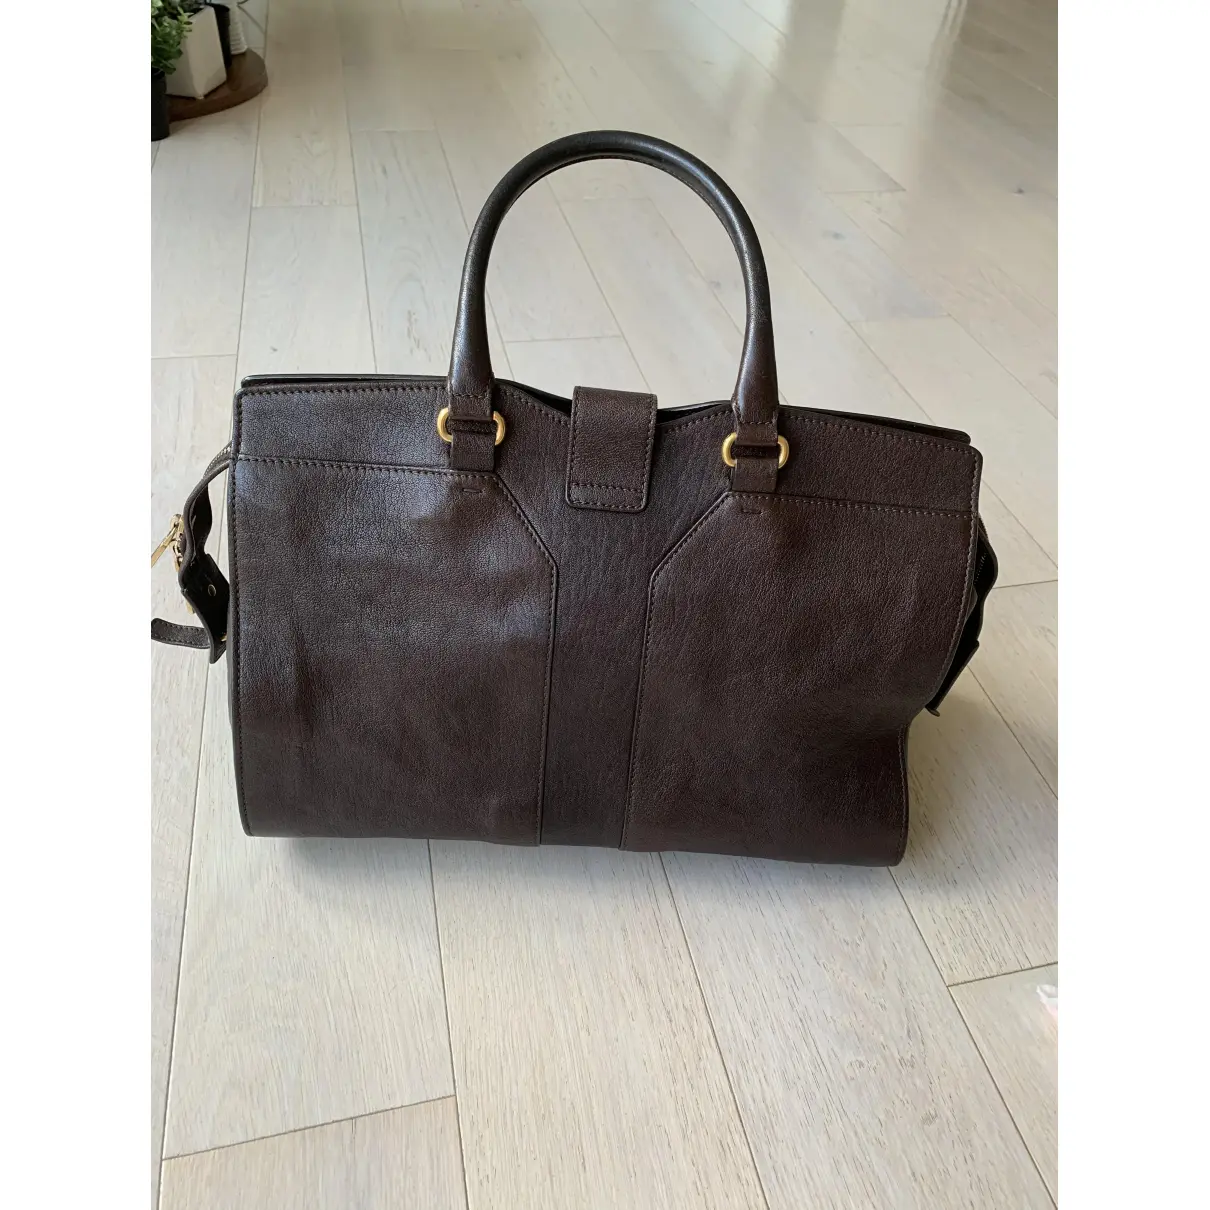 Buy Yves Saint Laurent Chyc leather handbag online